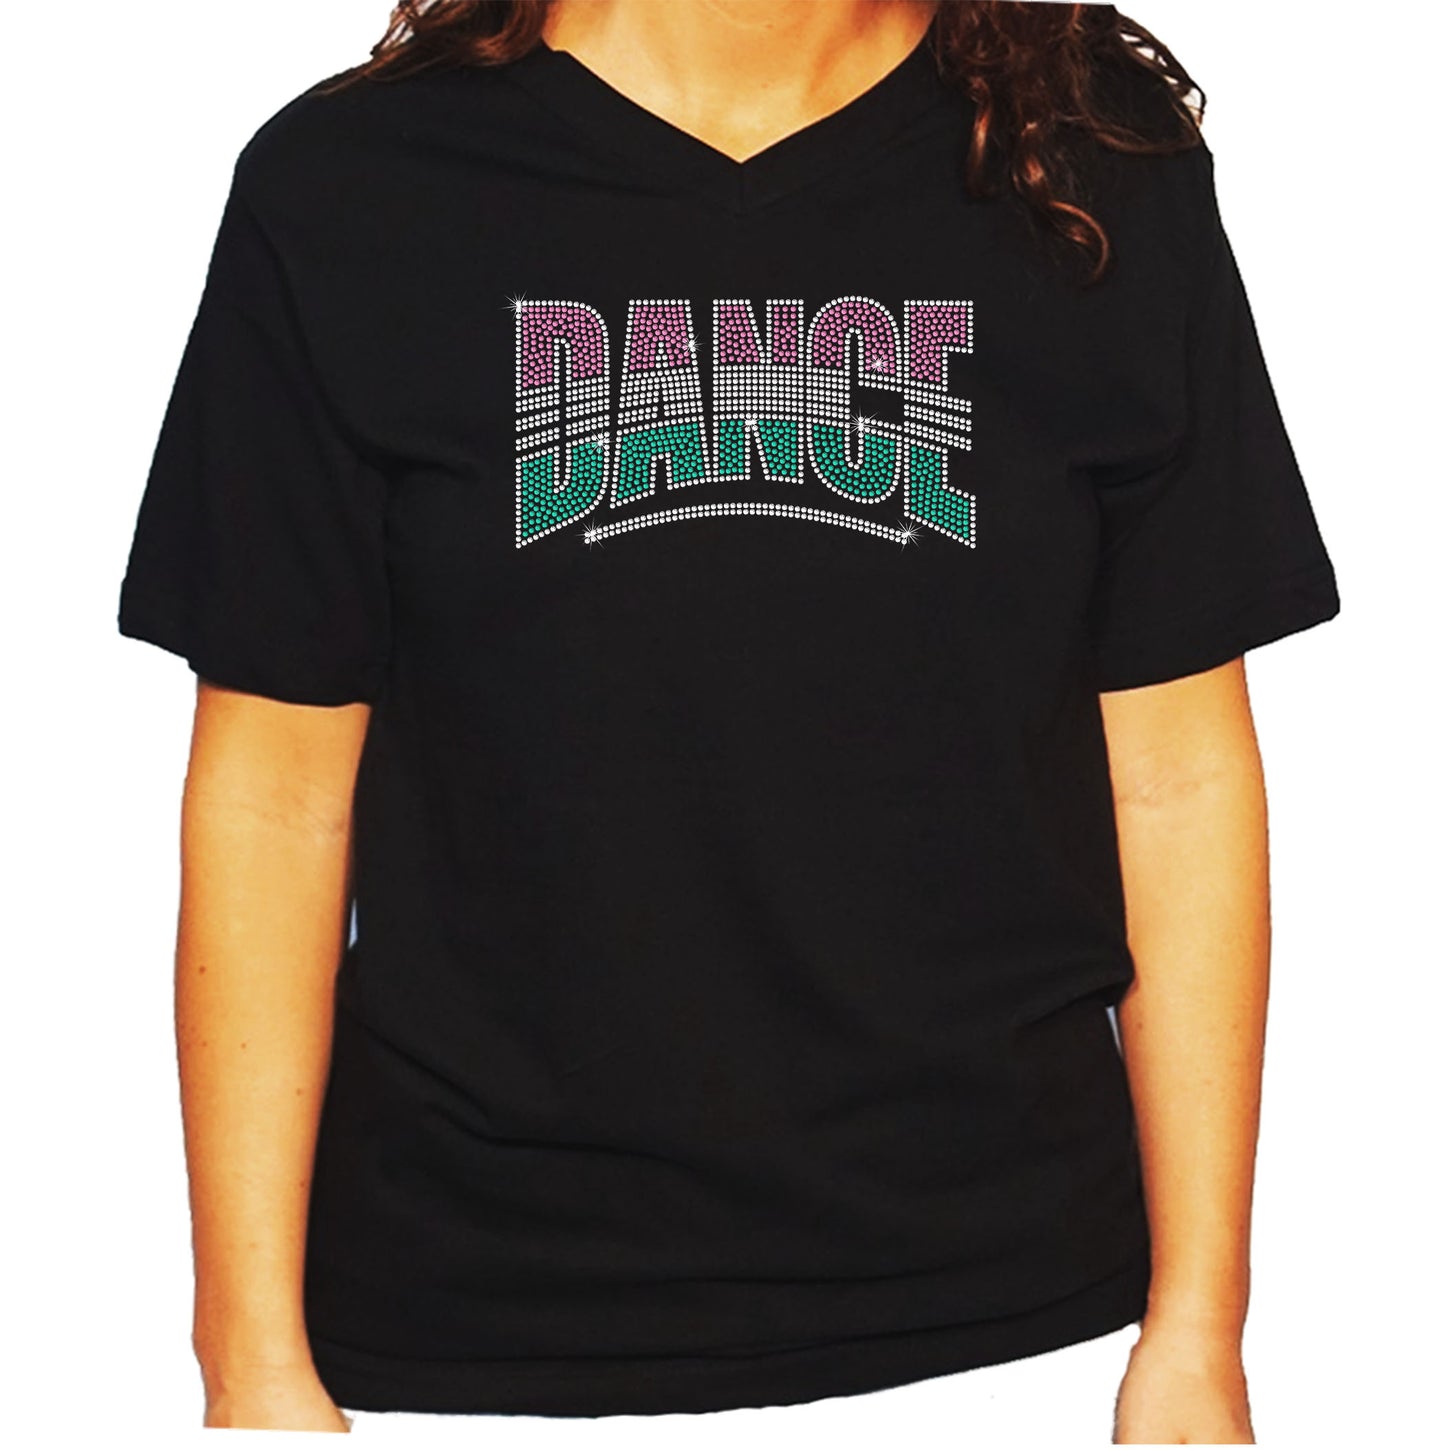 Women's/Unisex Rhinestone T-Shirt with Colorful Dance - Dance Shirt, Dancer Bling